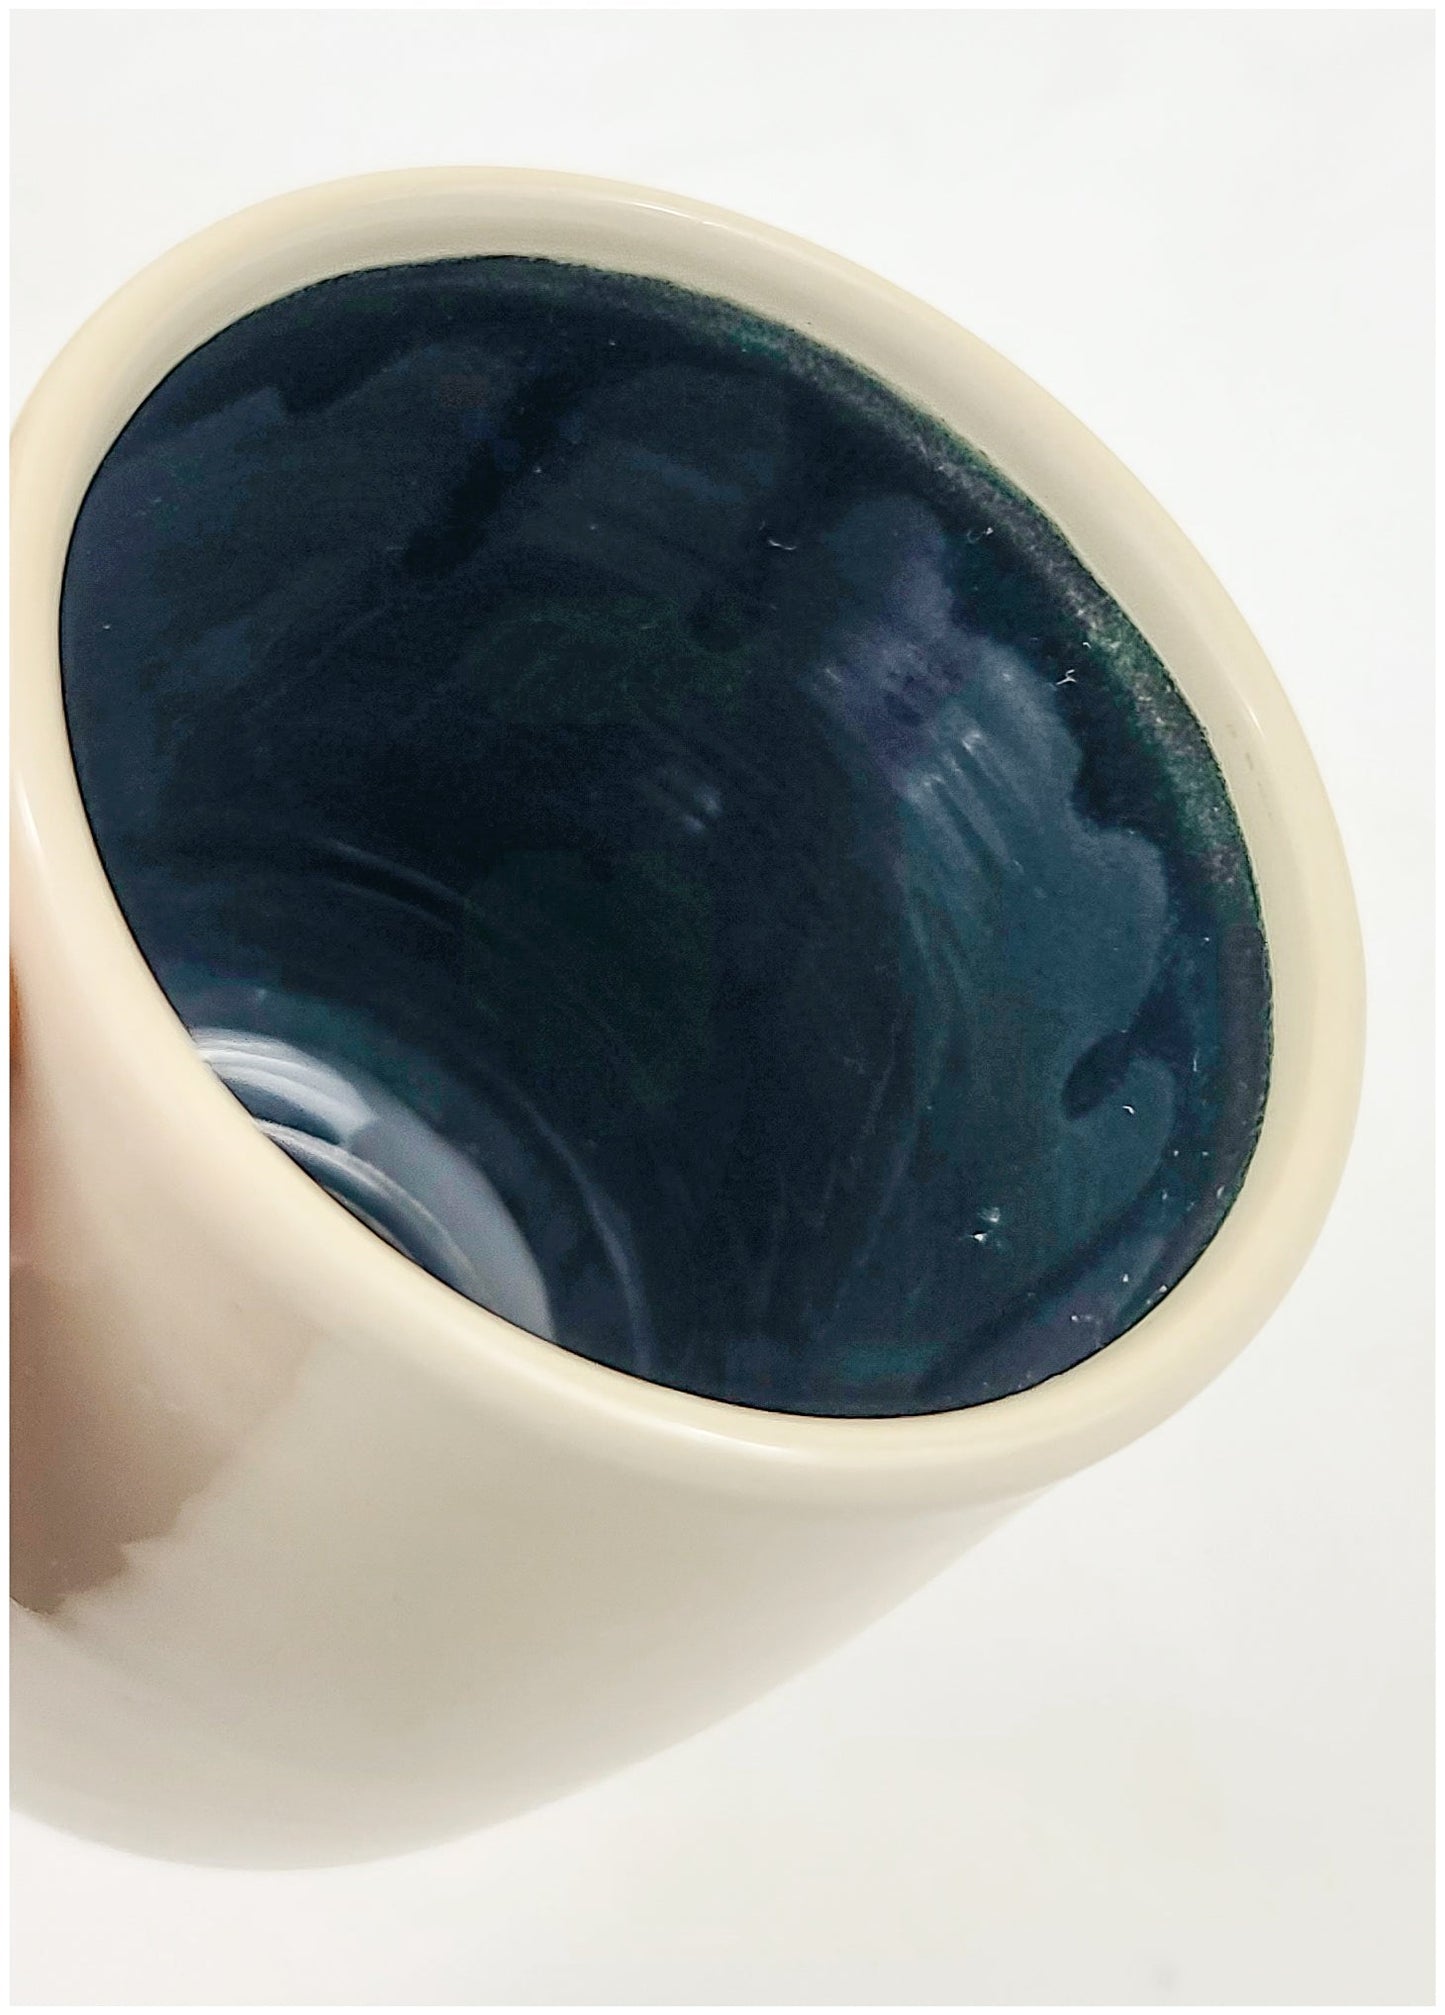 Stoneware Mug With Hummingbird Image Ceramic & Pottery Glazes Elizabeth Schowachert Art